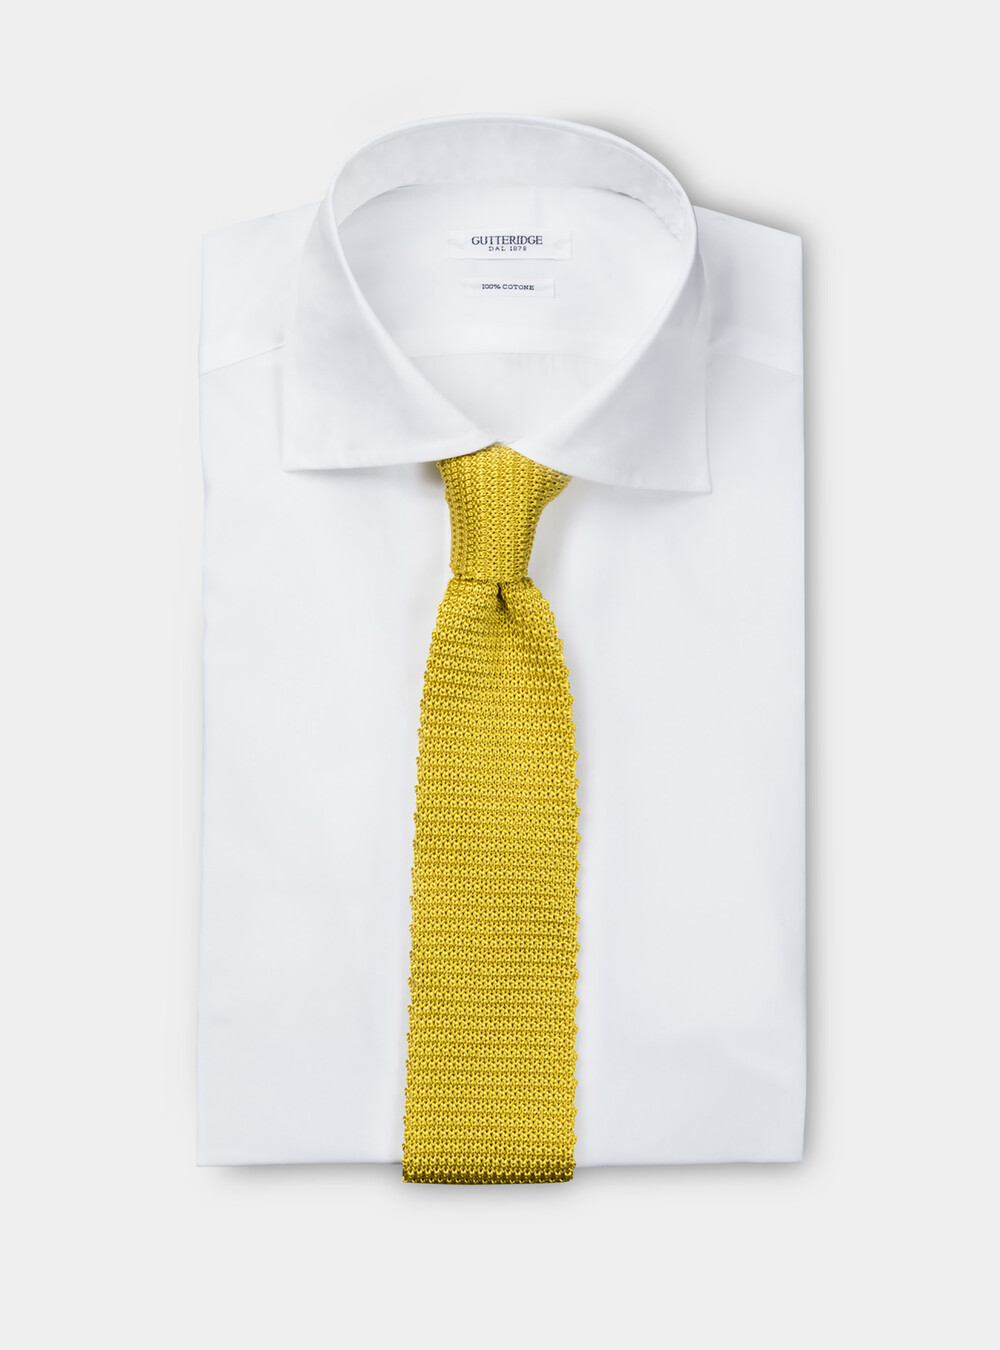 Cravatta in maglia 100% seta | Gutteridge | Cravatte Uomo